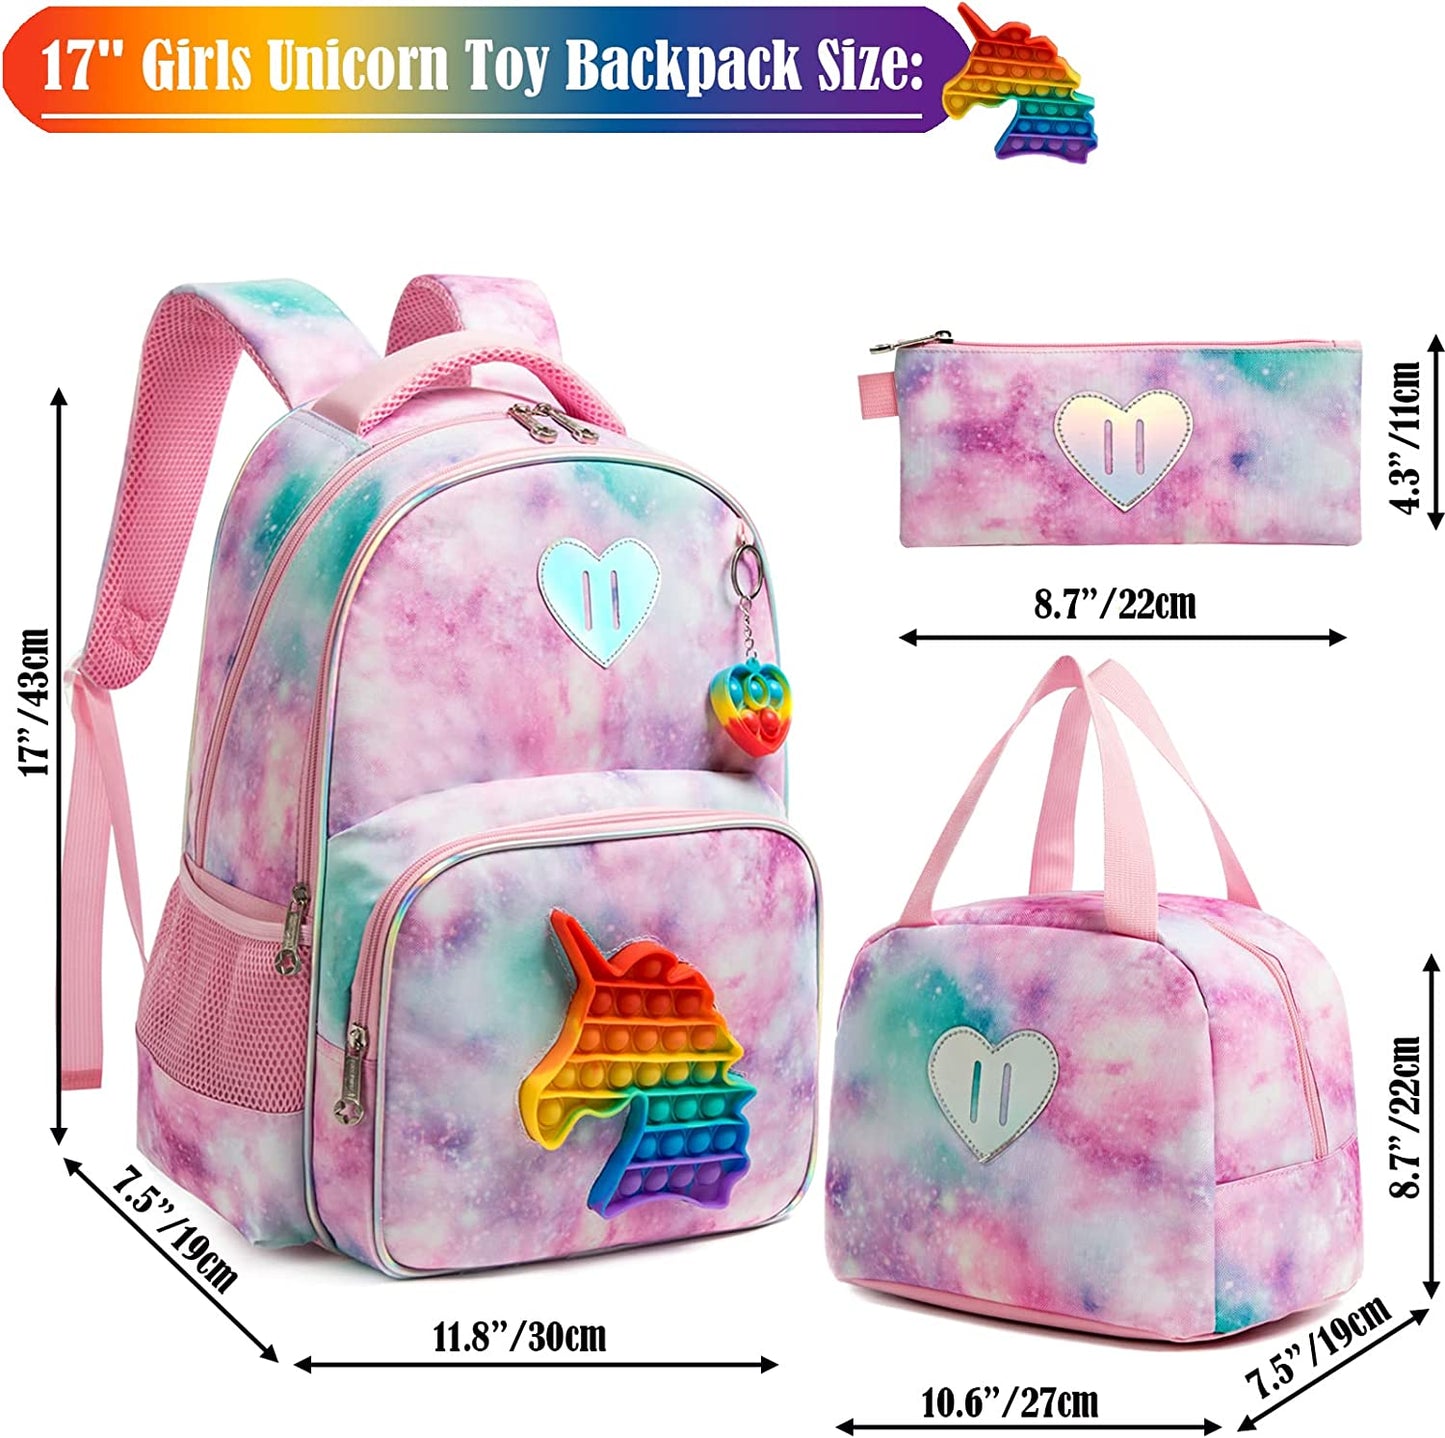 3 In 1 Kids Bags  || Children School Bags for Girl || Bag Set with Pop It Push It - LittleCuckoo